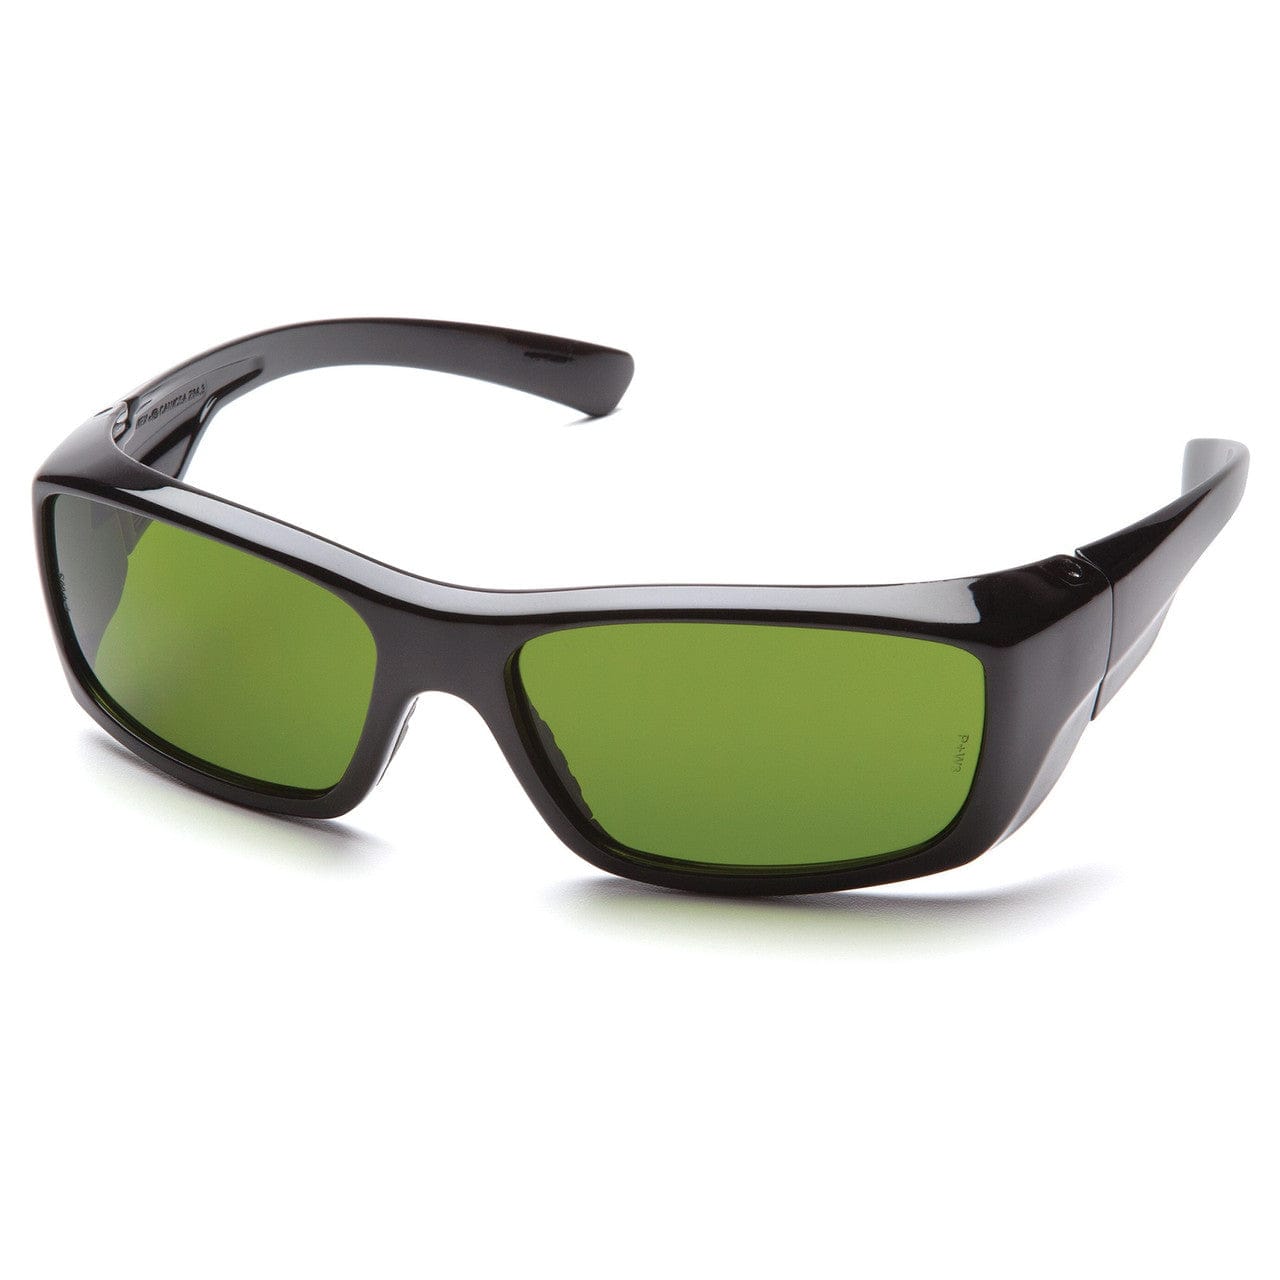 Pyramex Emerge Safety Glasses Black Frame IR Shade 3.0 Lens SB7960SF